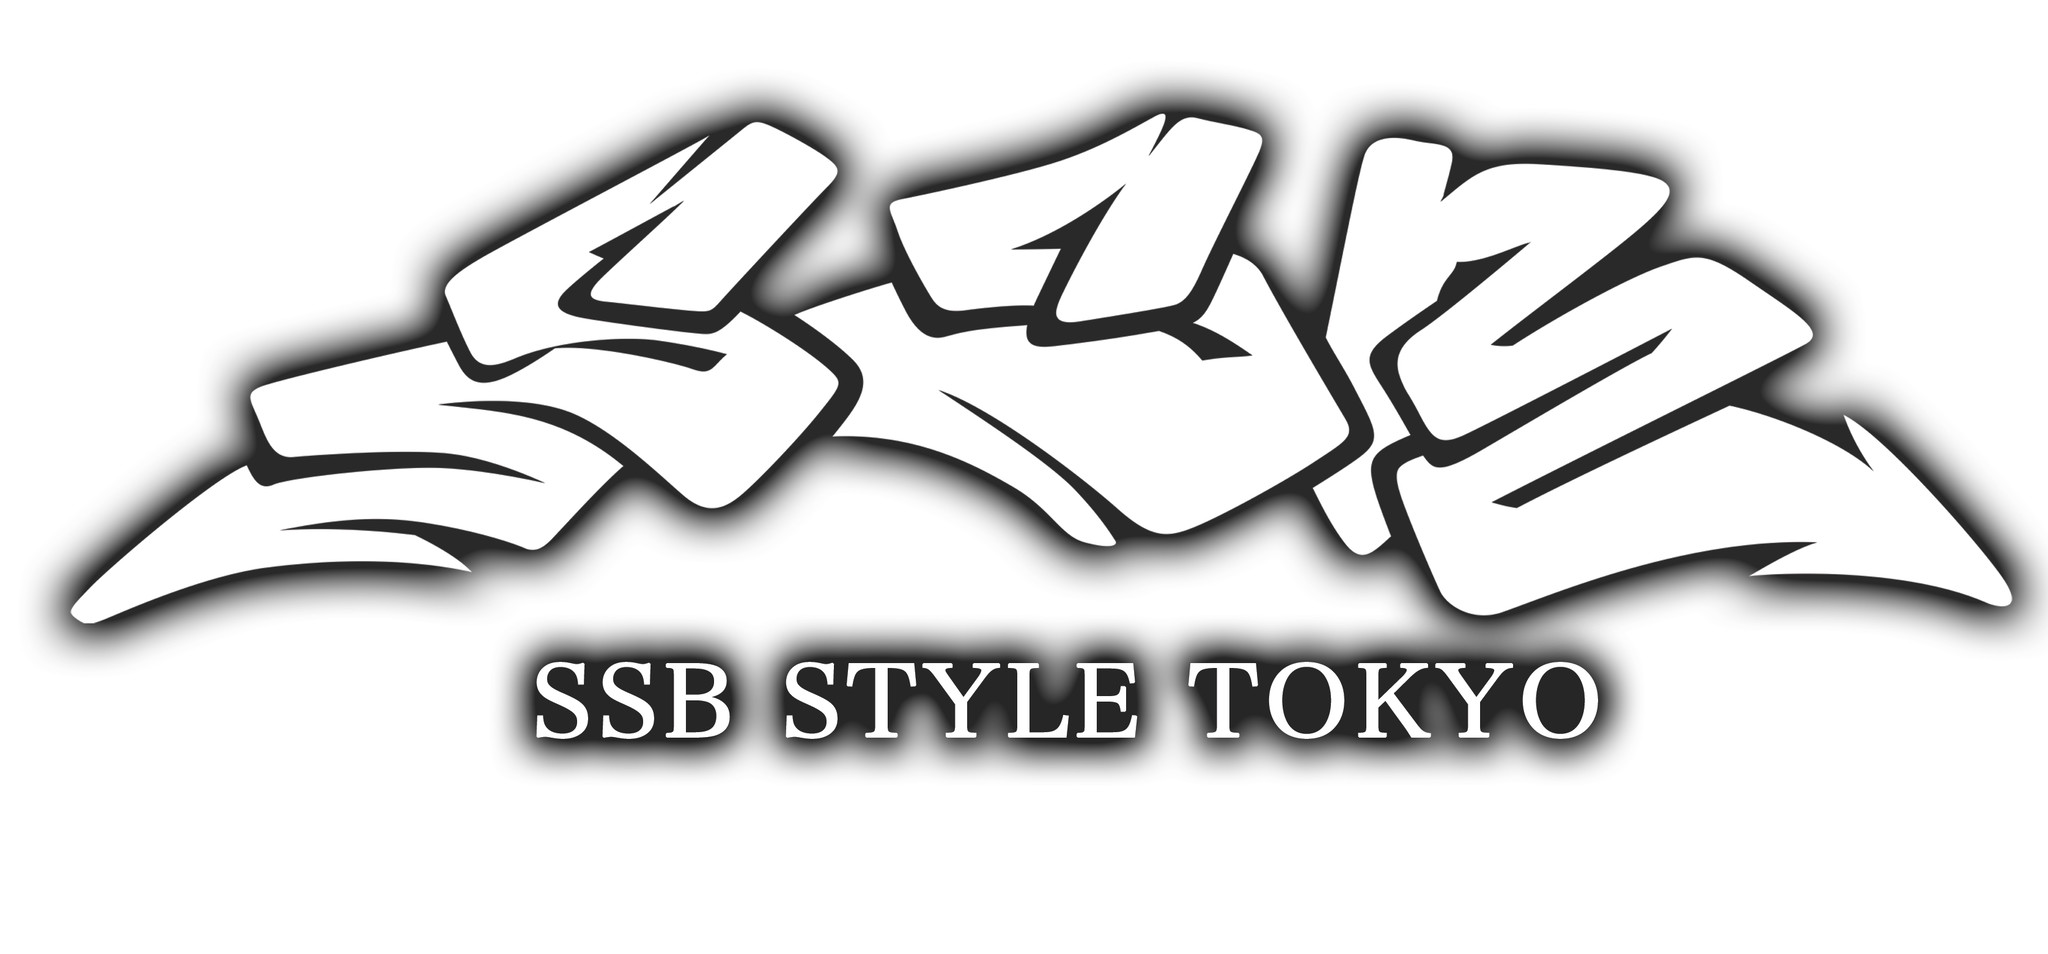 SSB style tokyo